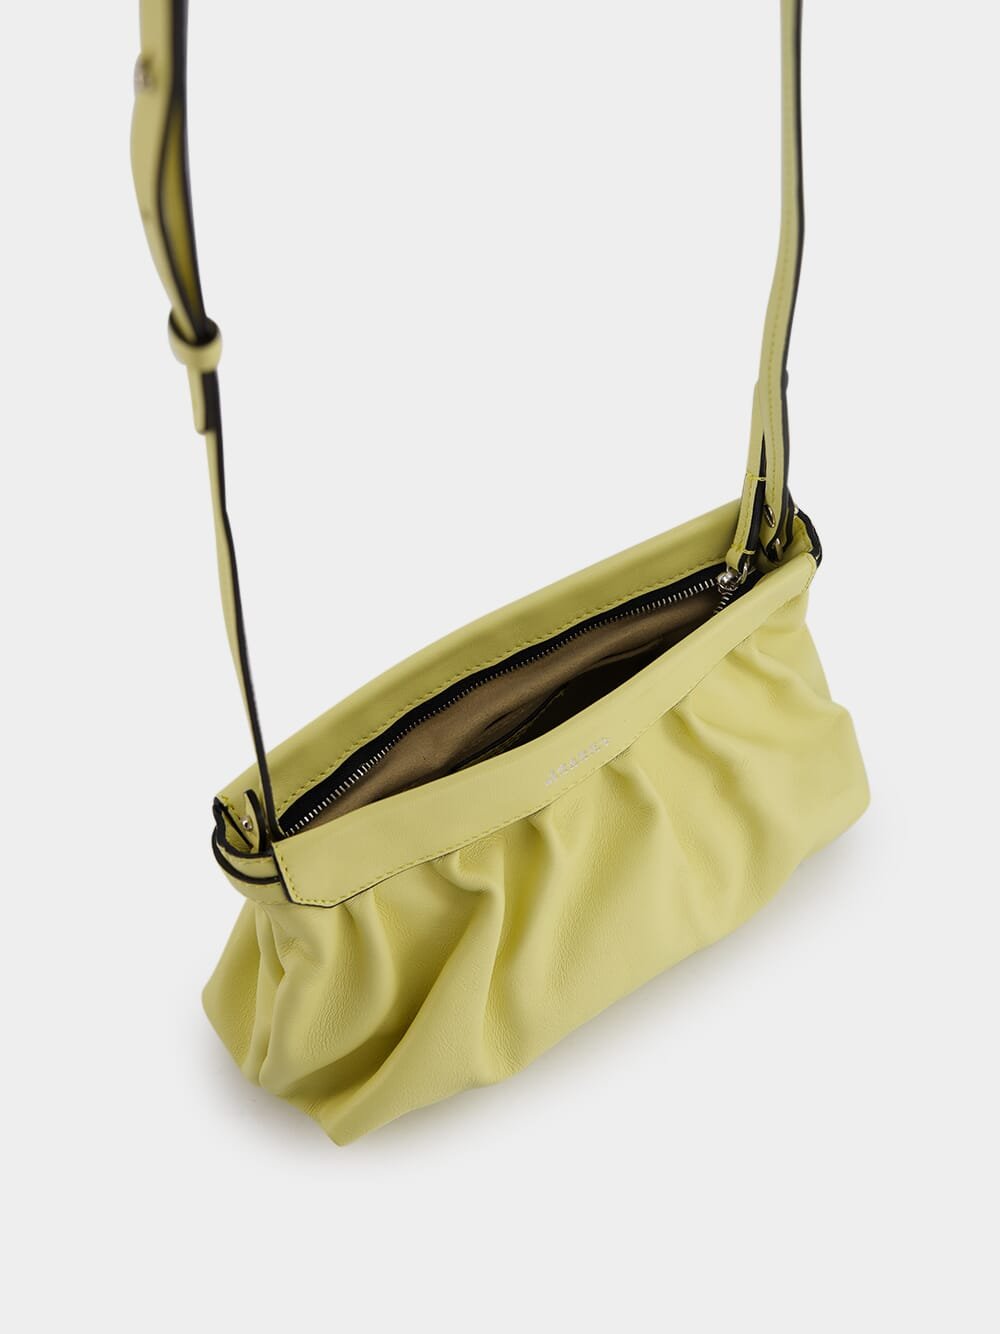 ISABEL MARANT Luz leather clutch bag - Yellow